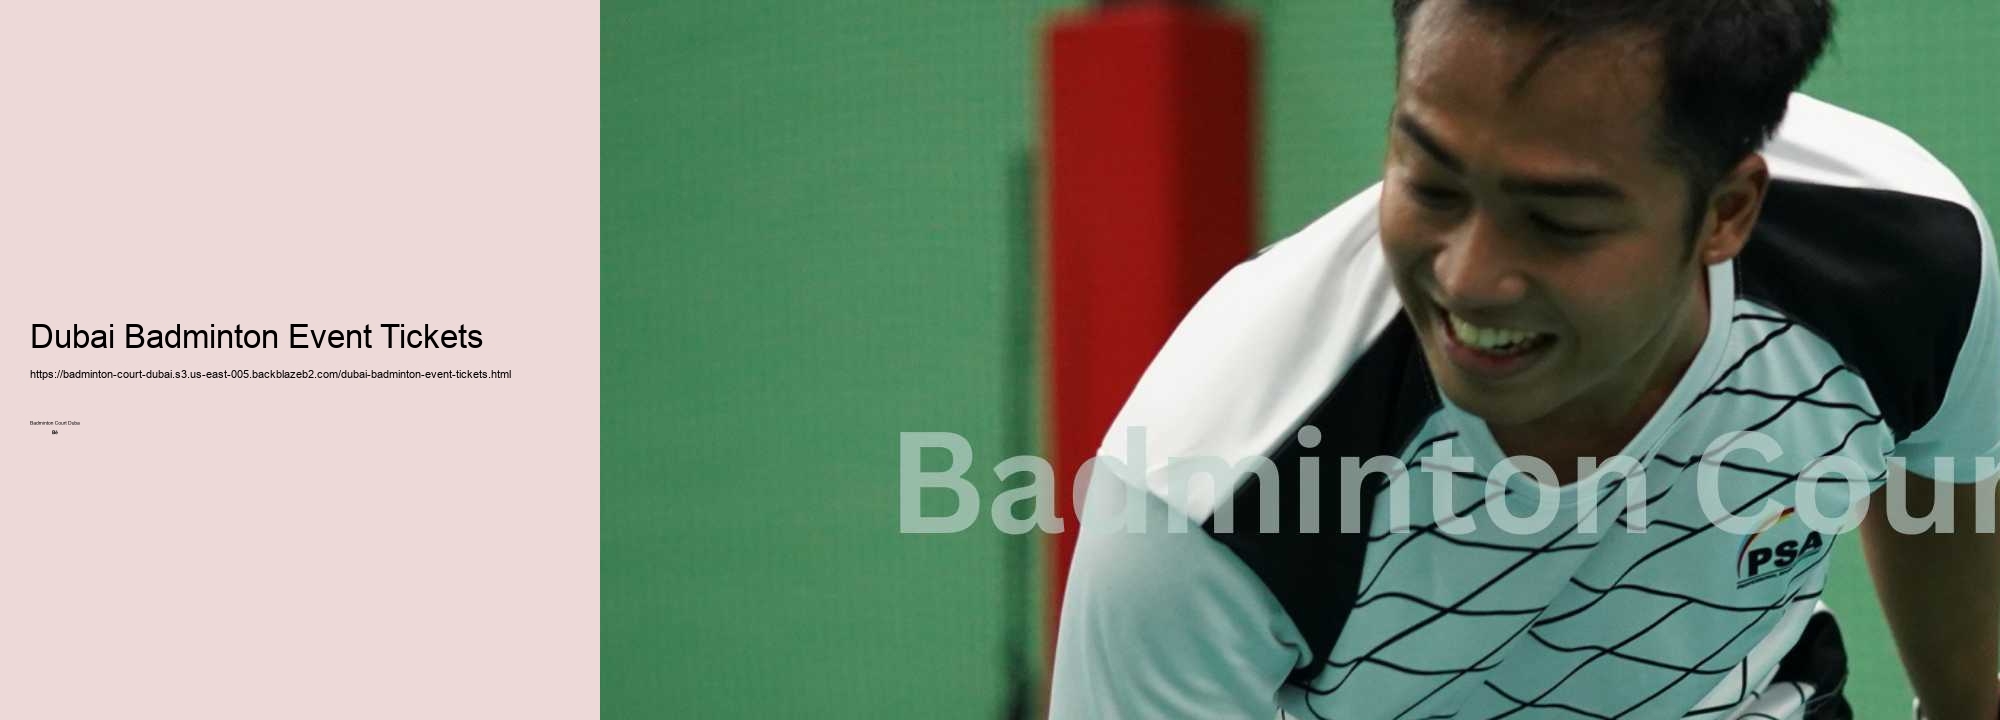 Dubai Badminton Event Tickets